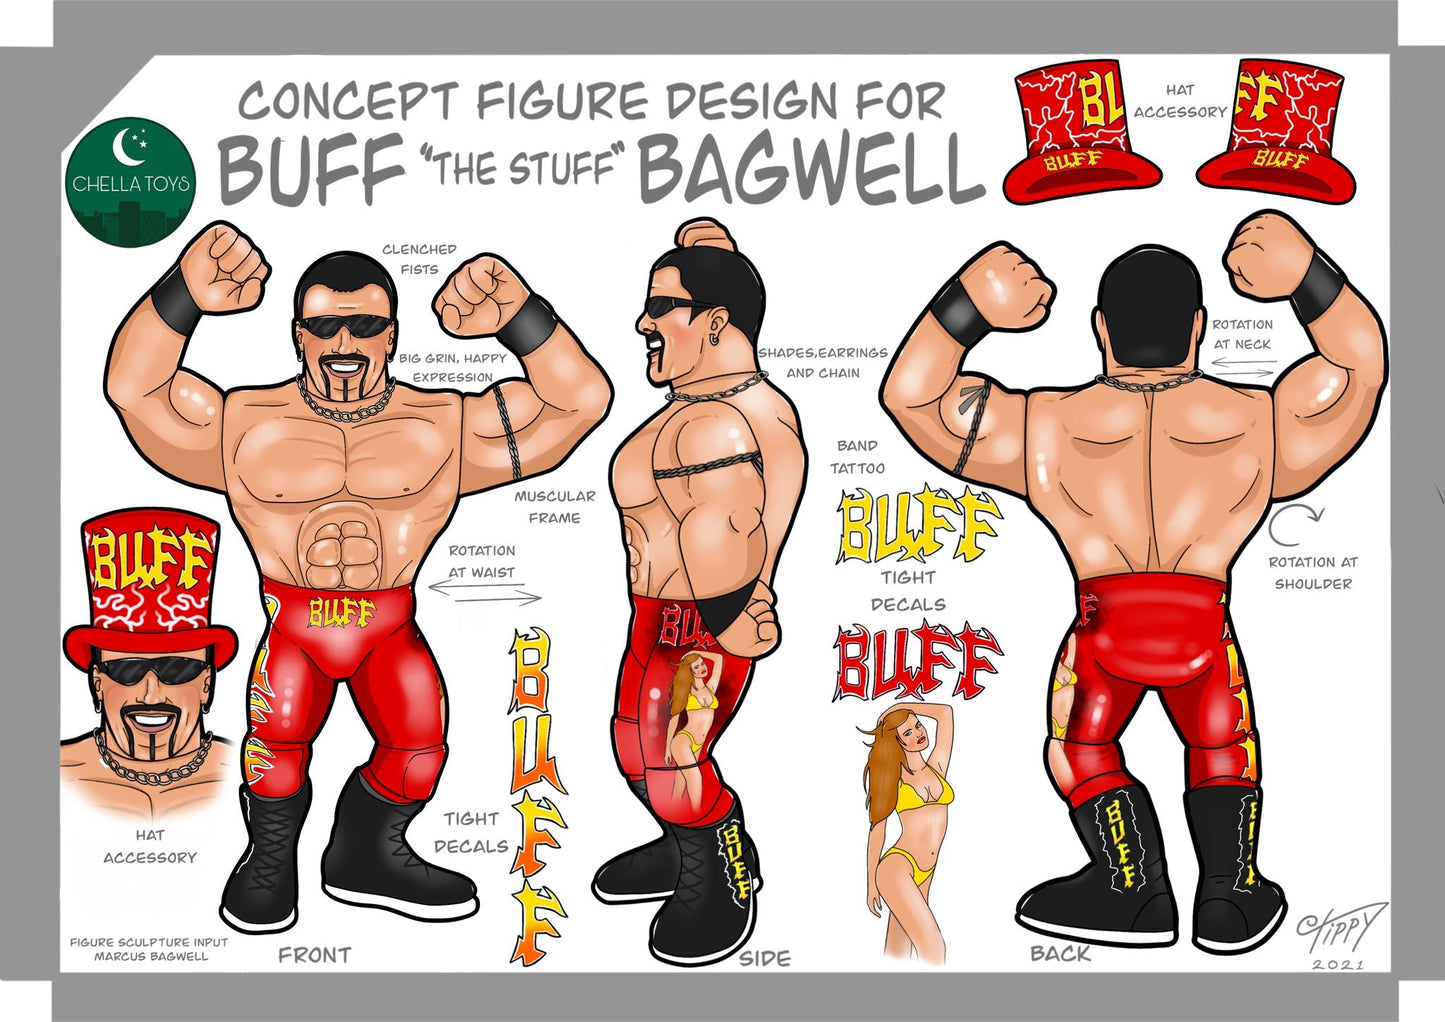 Chella Toys Wrestling Megastars Buff "The Stuff" Bagwell